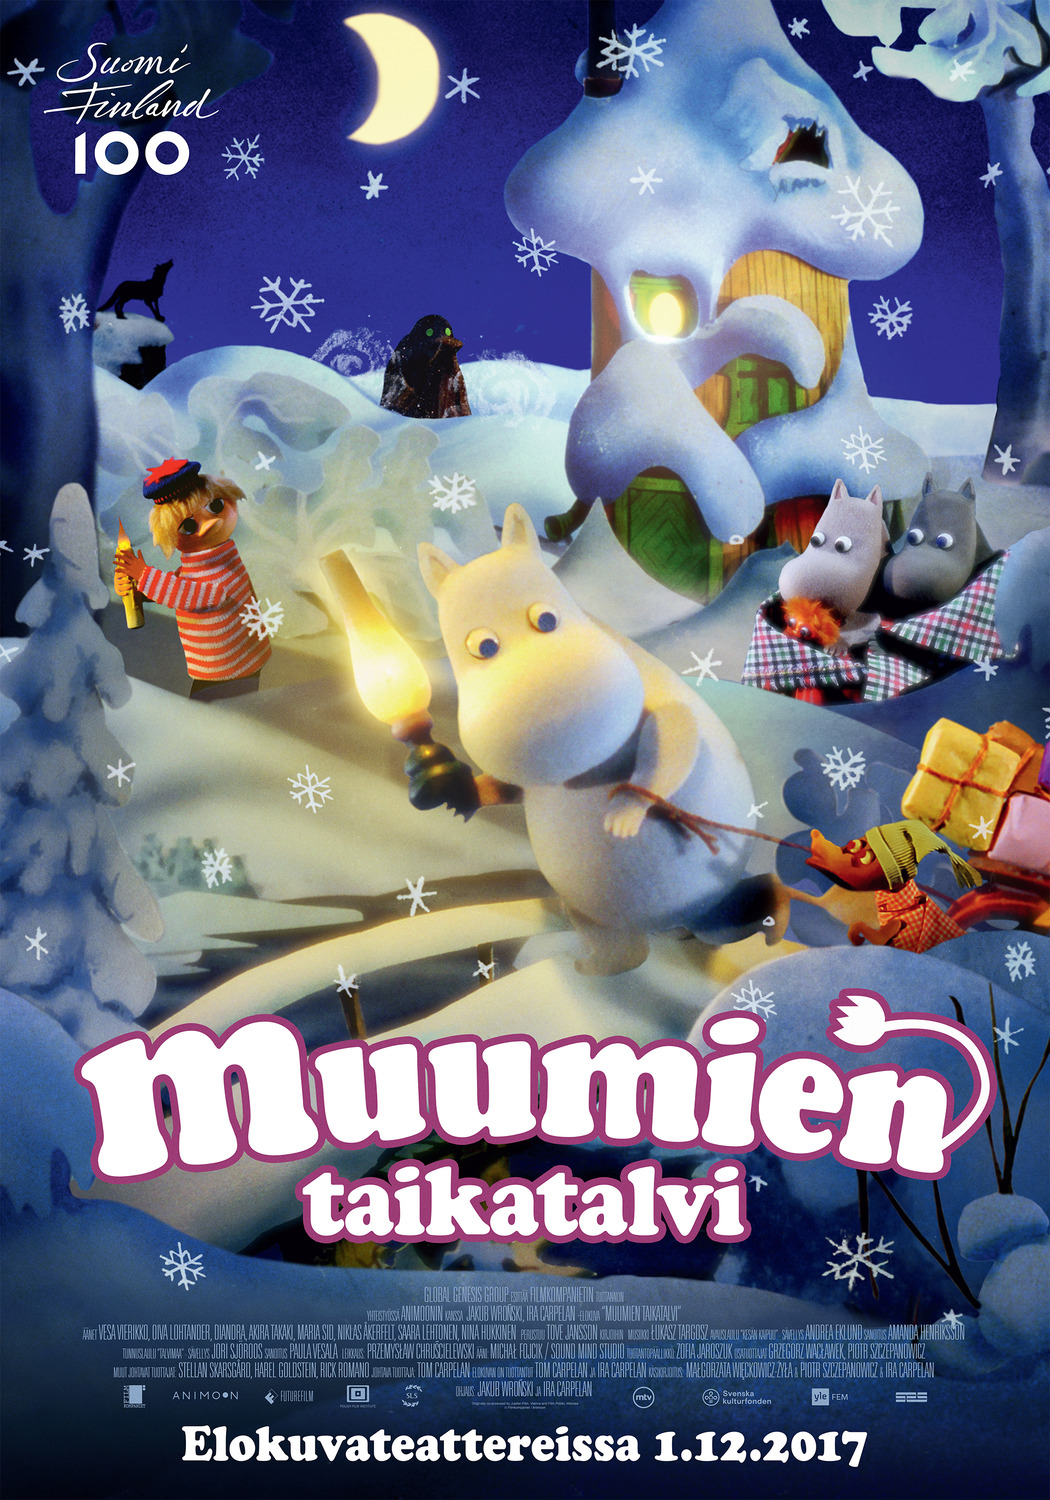 Extra Large Movie Poster Image for Muumien taikatalvi (#2 of 2)